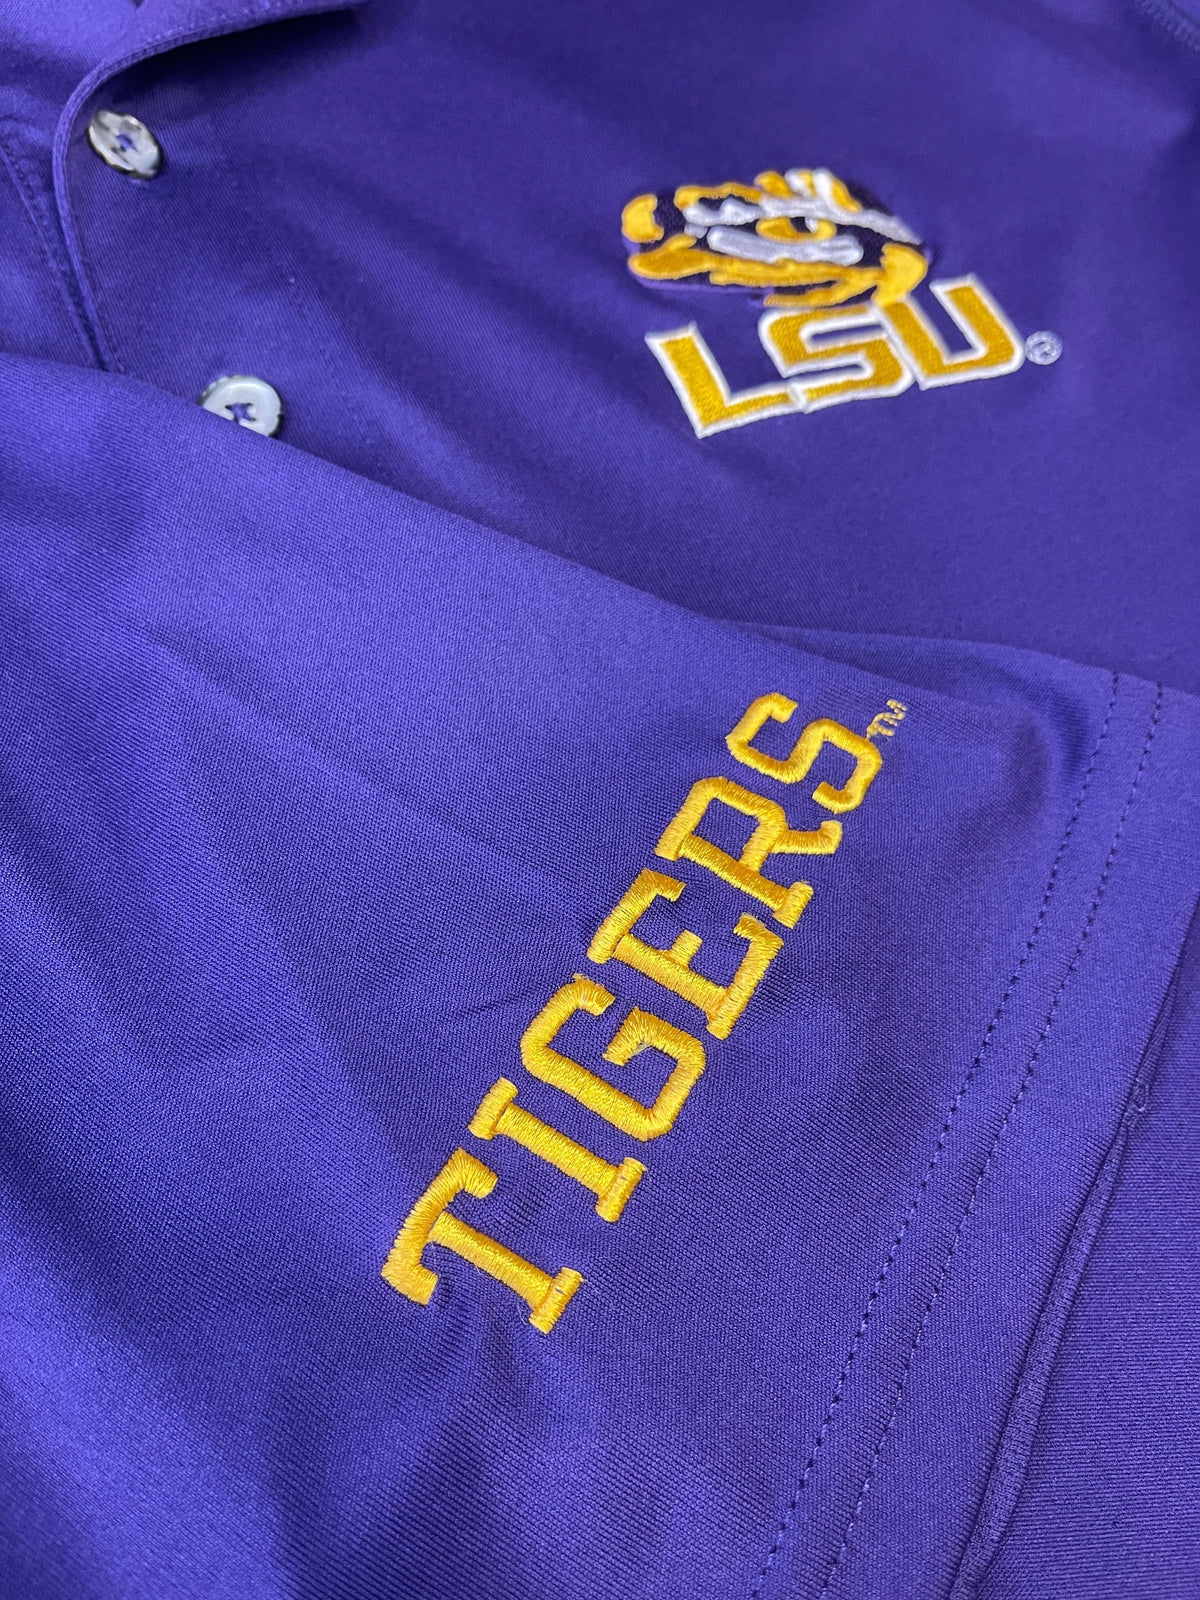 NCAA Louisiana State LSU Tigers Champion Golf Polo Shirt Men's Large